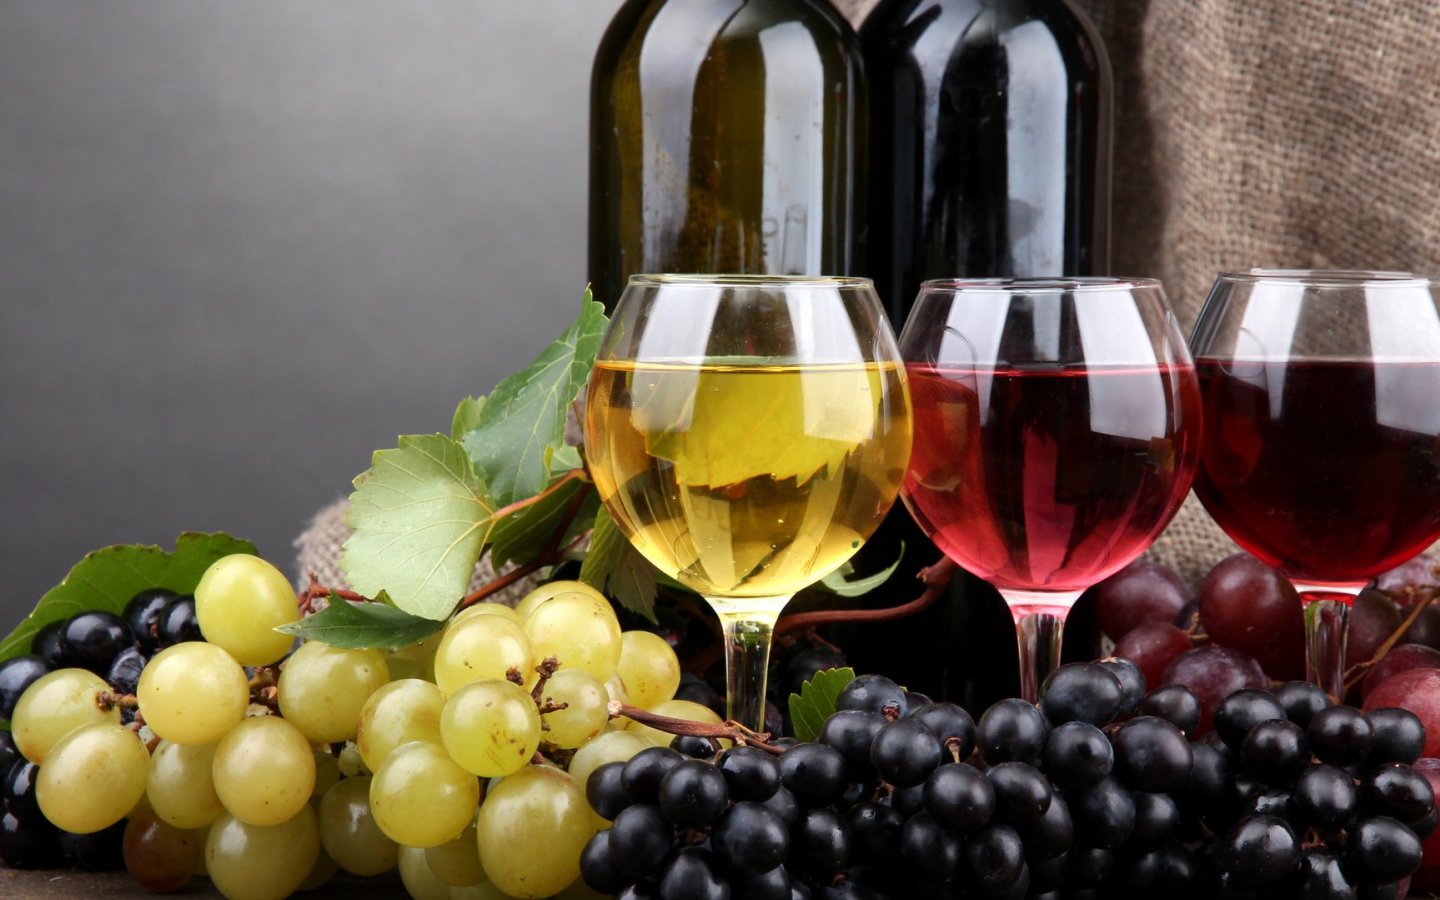 Червоне сухе вино подають до гарячого смаженого або запеченого м'яса